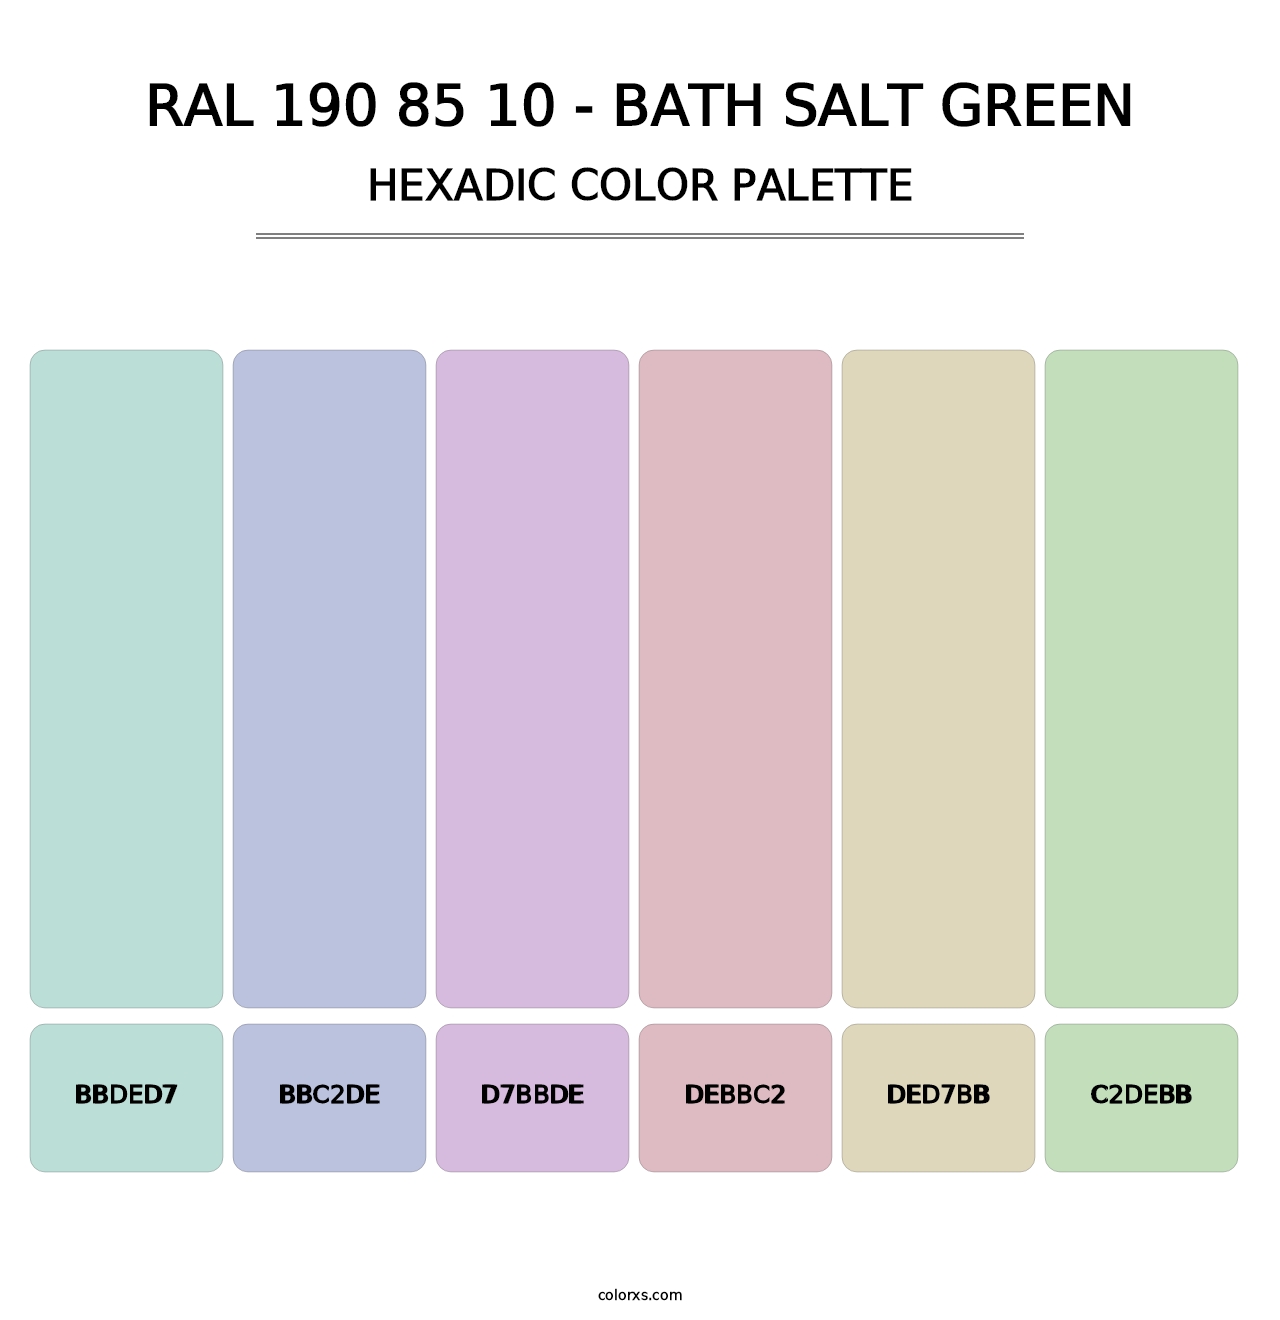 RAL 190 85 10 - Bath Salt Green - Hexadic Color Palette